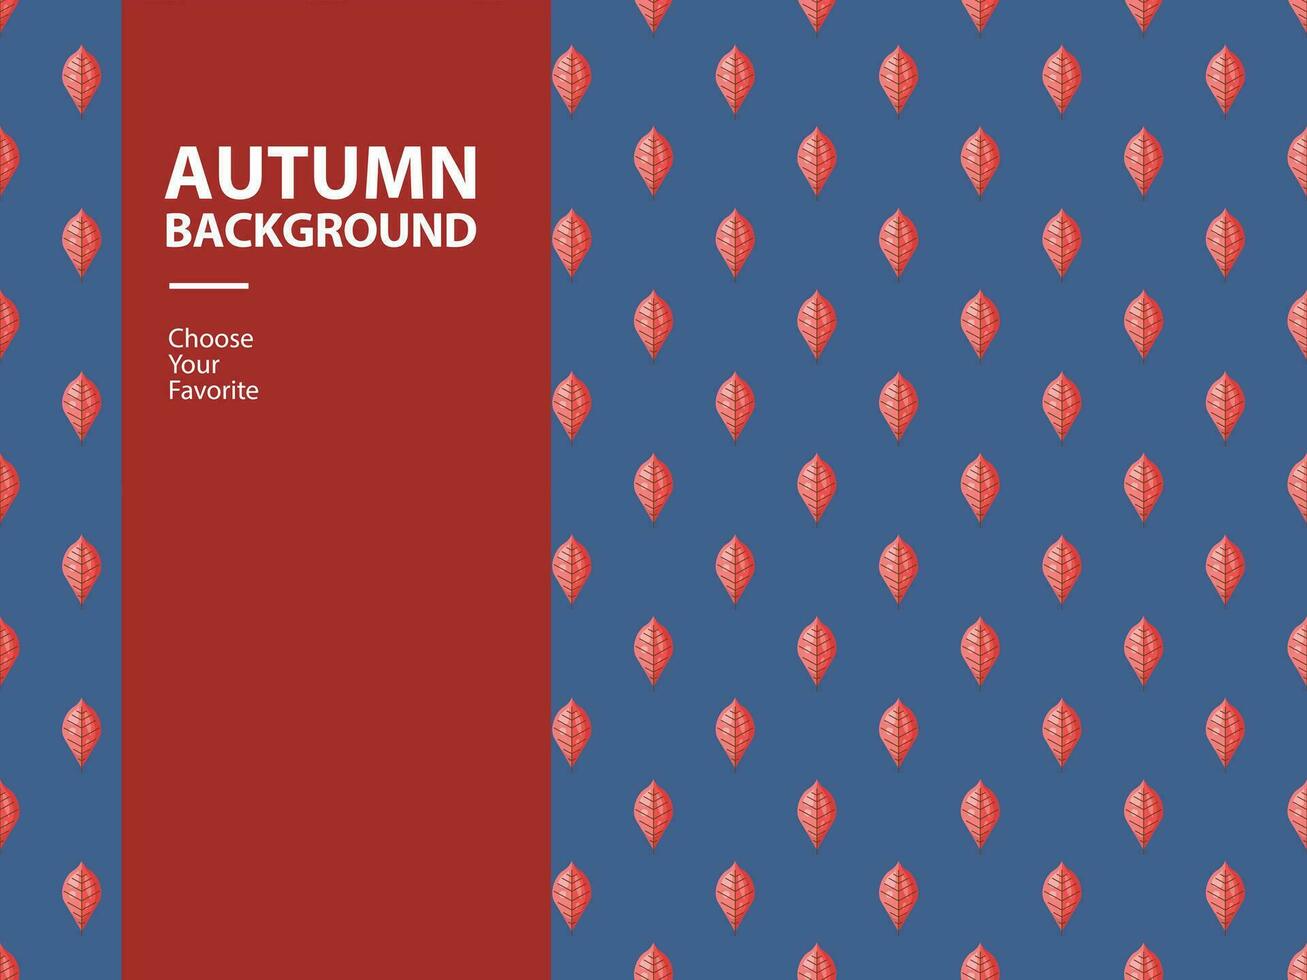 otoño vector fondo de pantalla modelo sin costura elemento floral fondo cosecha hoja tela arce Canadá